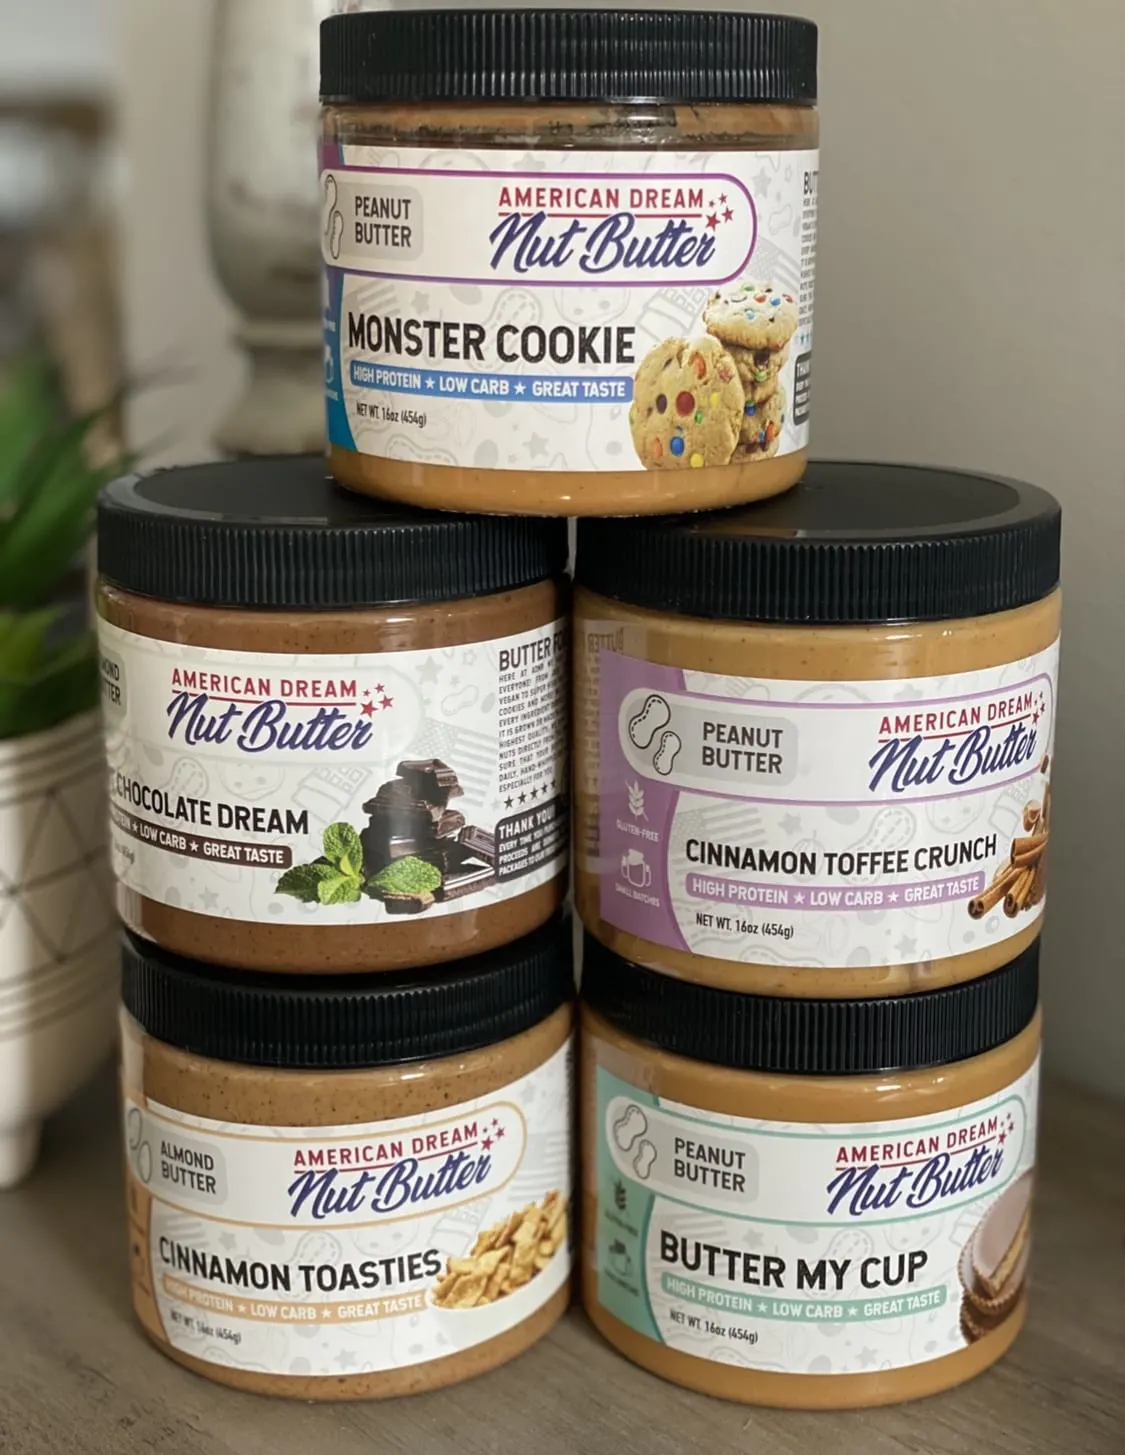 American Dream Nut Butters: 10% discount code: poundddropper10